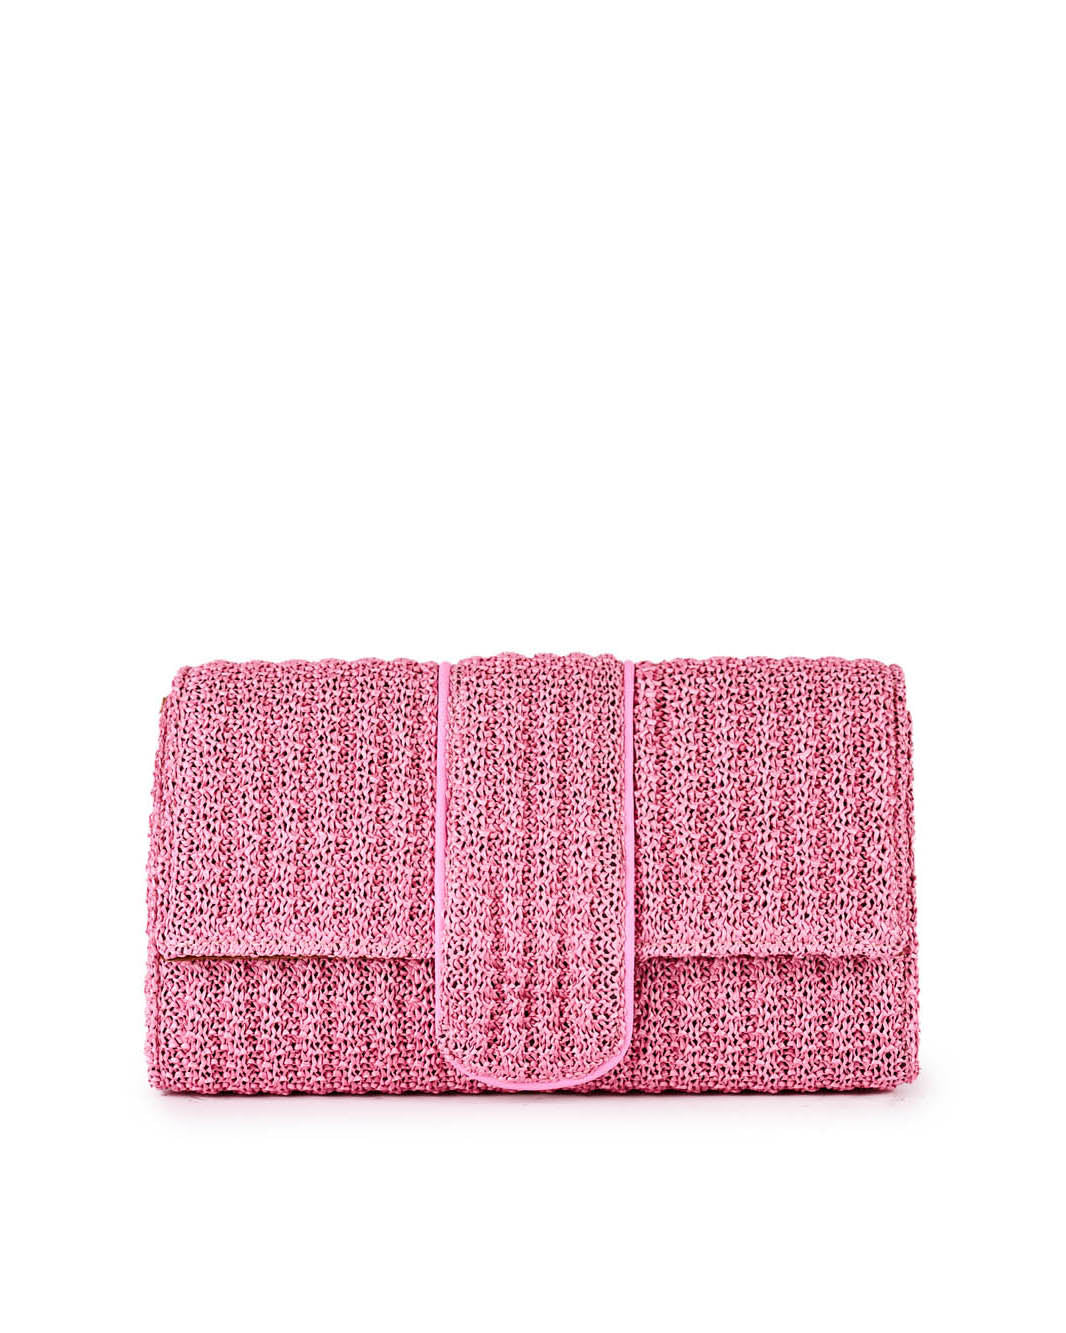 Pink textured woven clutch purse